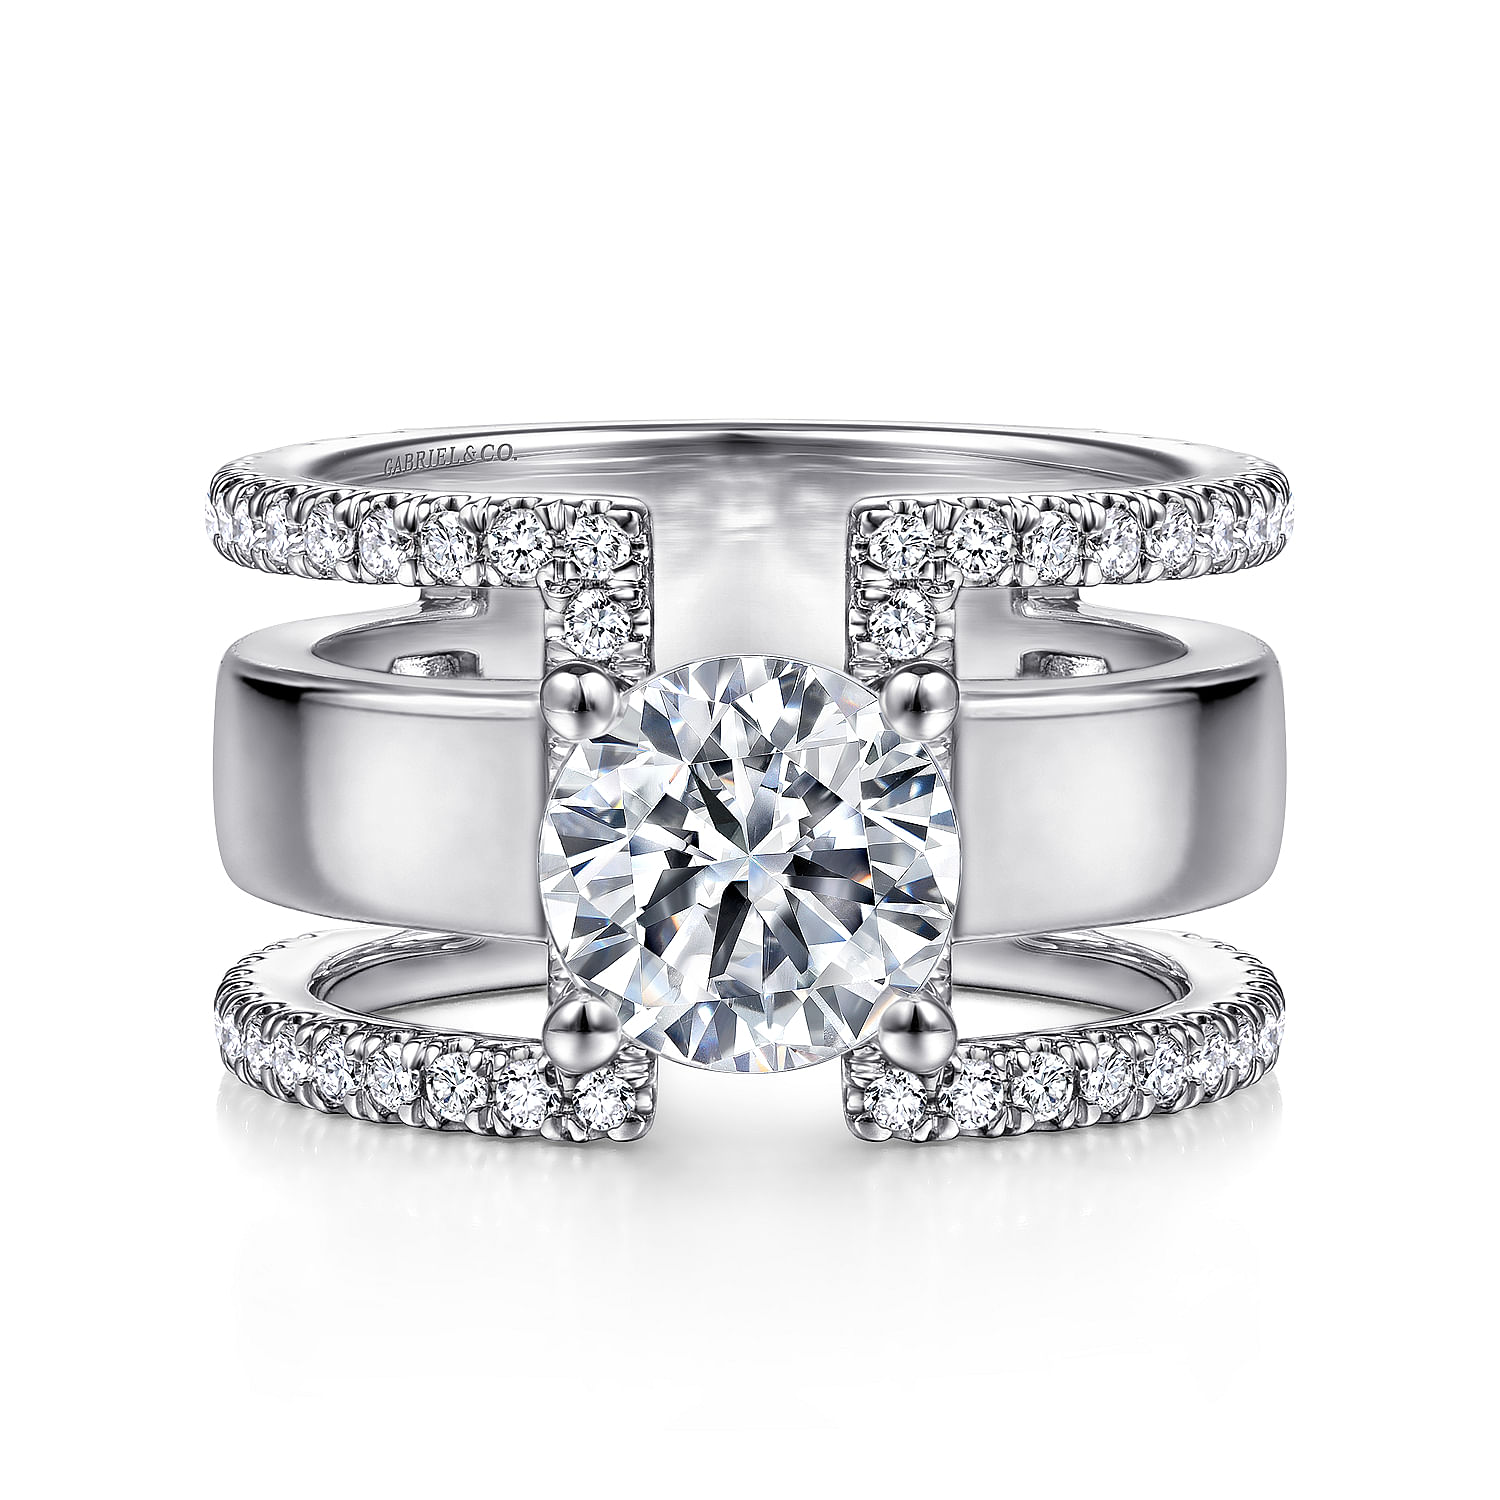 Edalee - 14K White Gold Round Diamond Engagement Ring